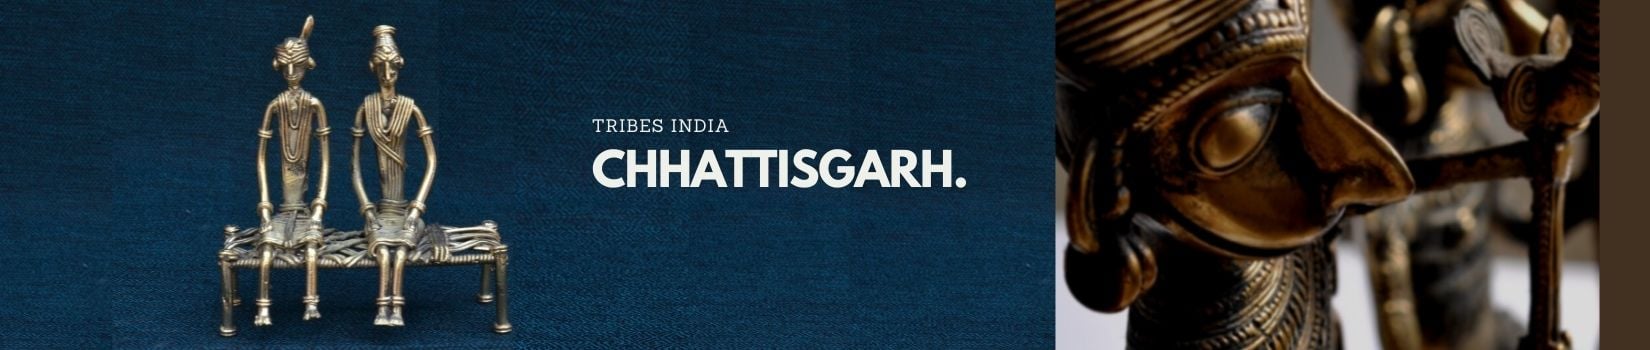 Tribes India Chhattisgarh